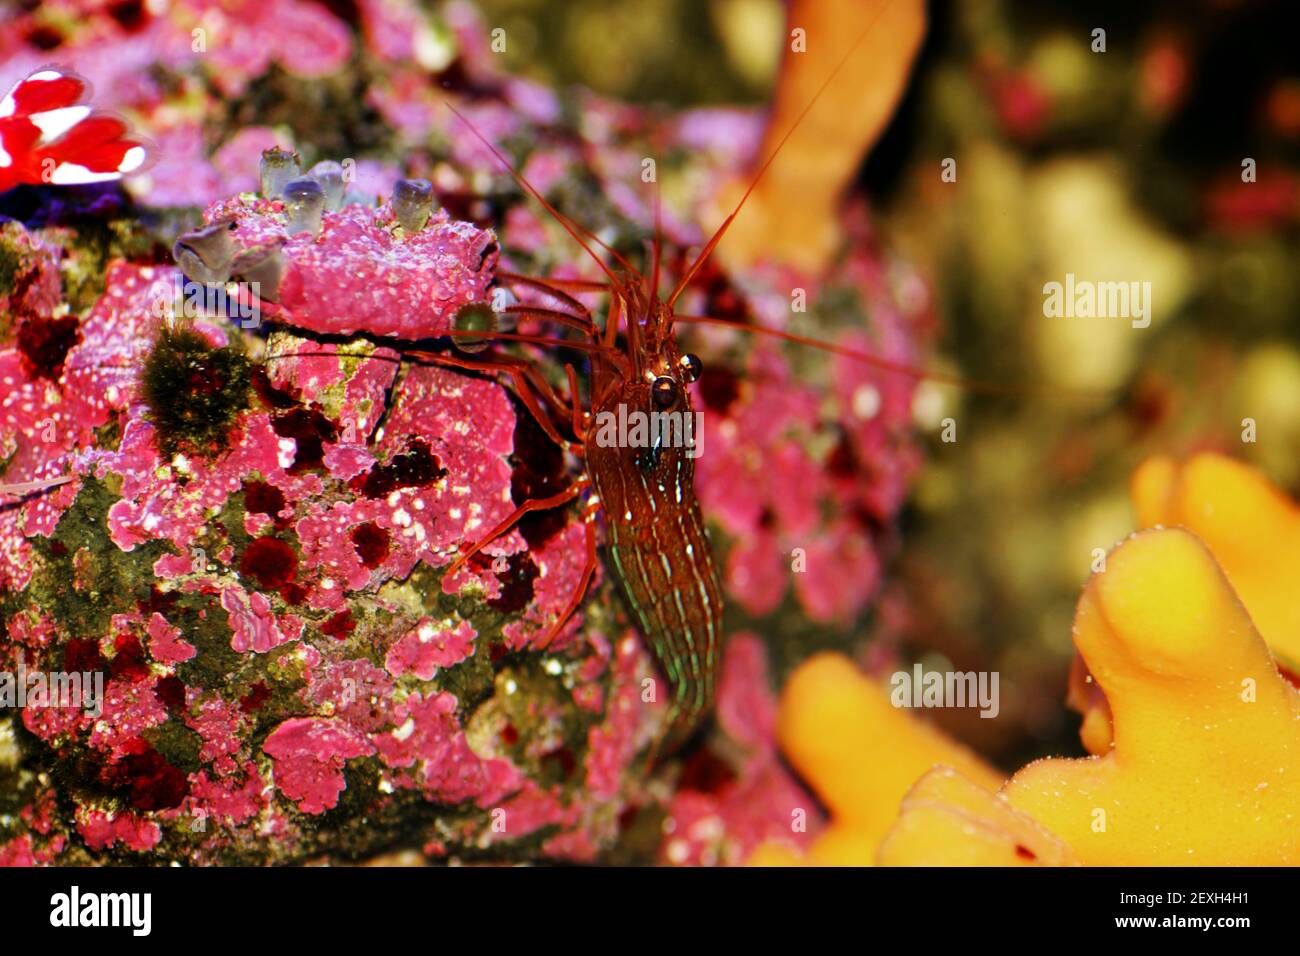 Mediterranean sea species of Peppermint Shrimp - Lysmata seticuadata Stock Photo